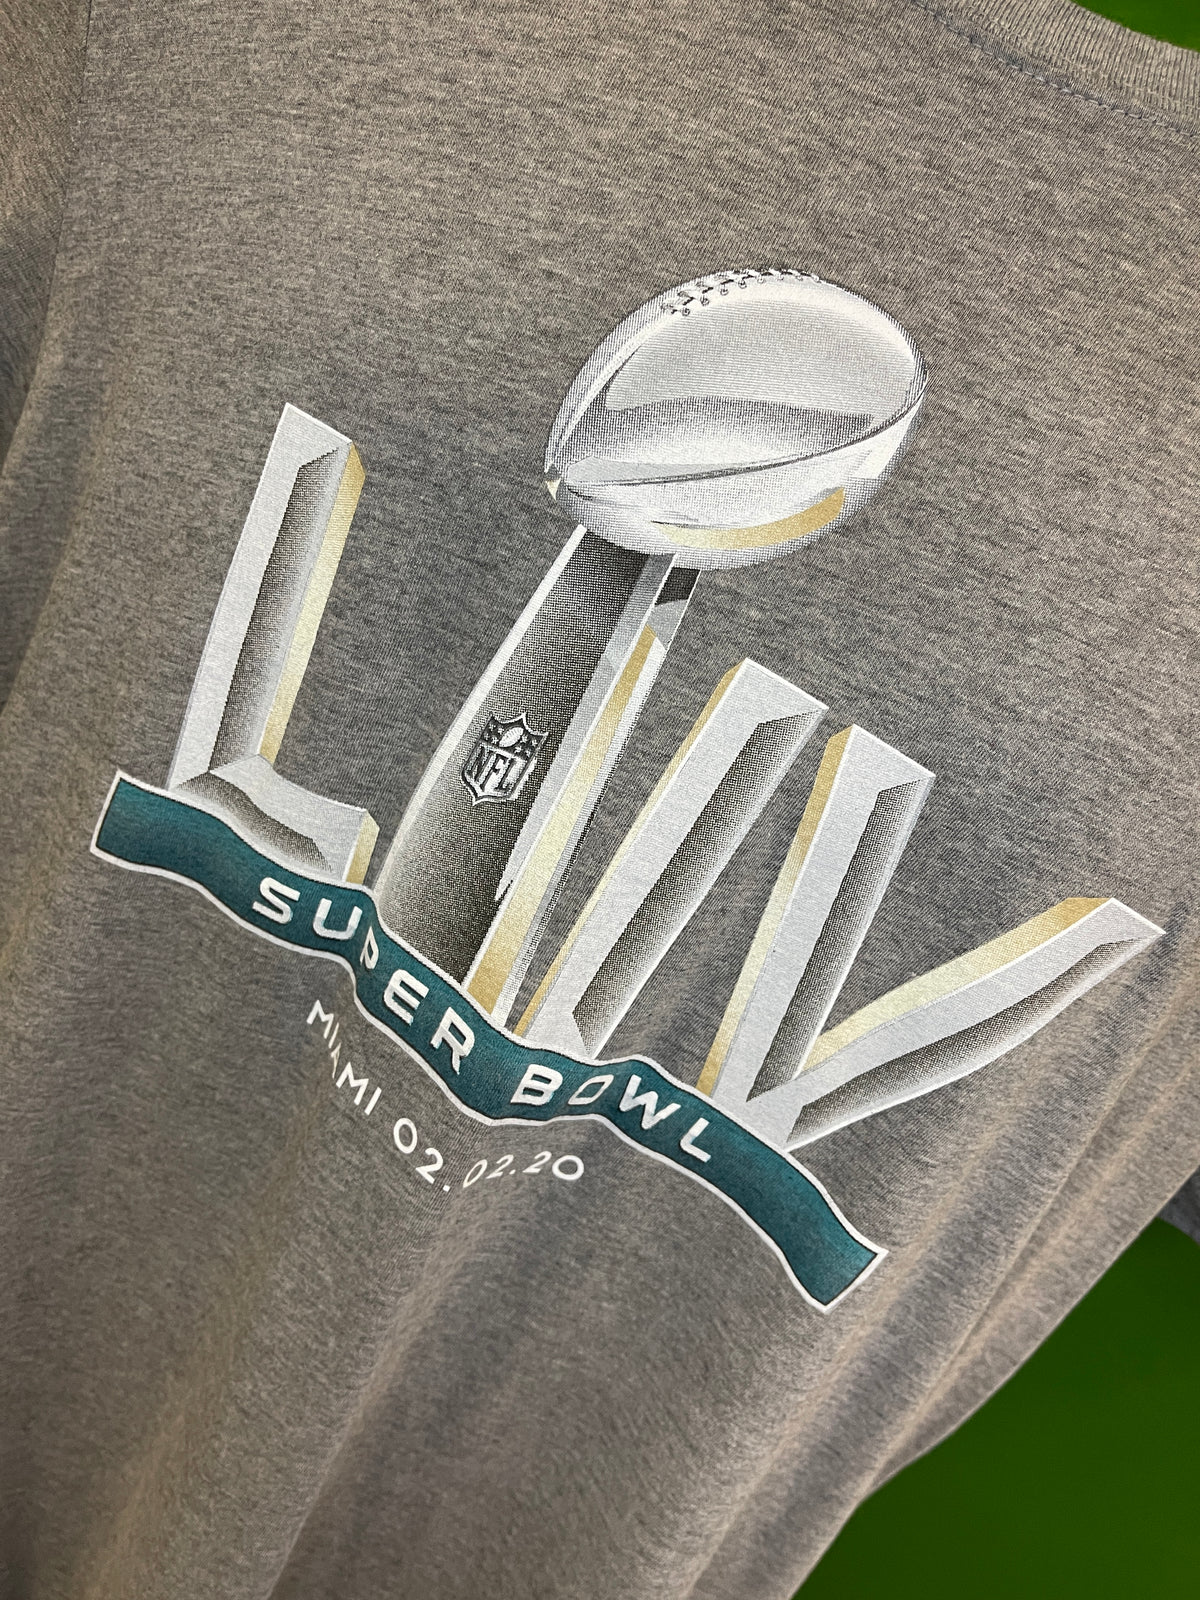 NFL Super Bowl LIV Miami 2020 '47 T-Shirt Men's Large